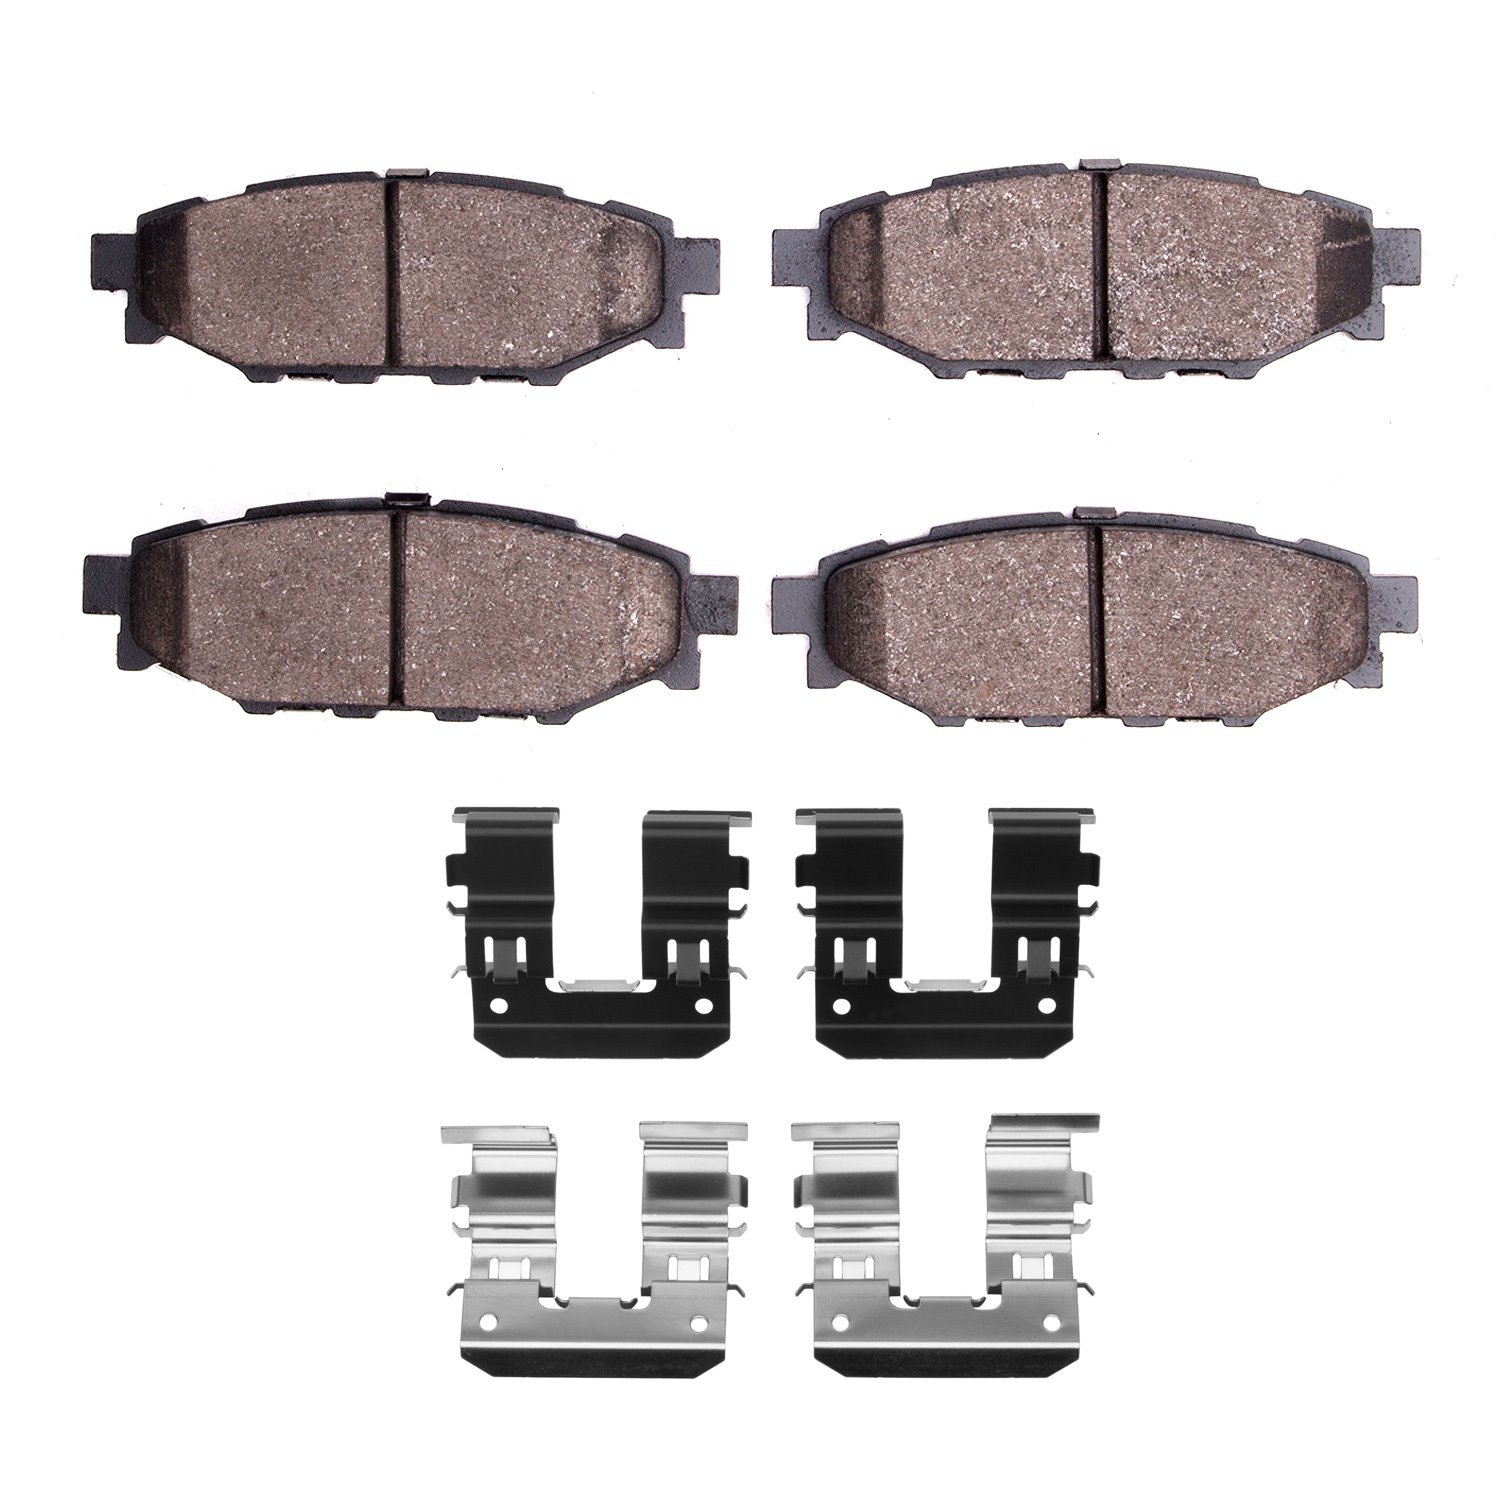 1551-1114-01 5000 Advanced Ceramic Brake Pads & Hardware Kit, Fits Select Subaru, Position: Rear